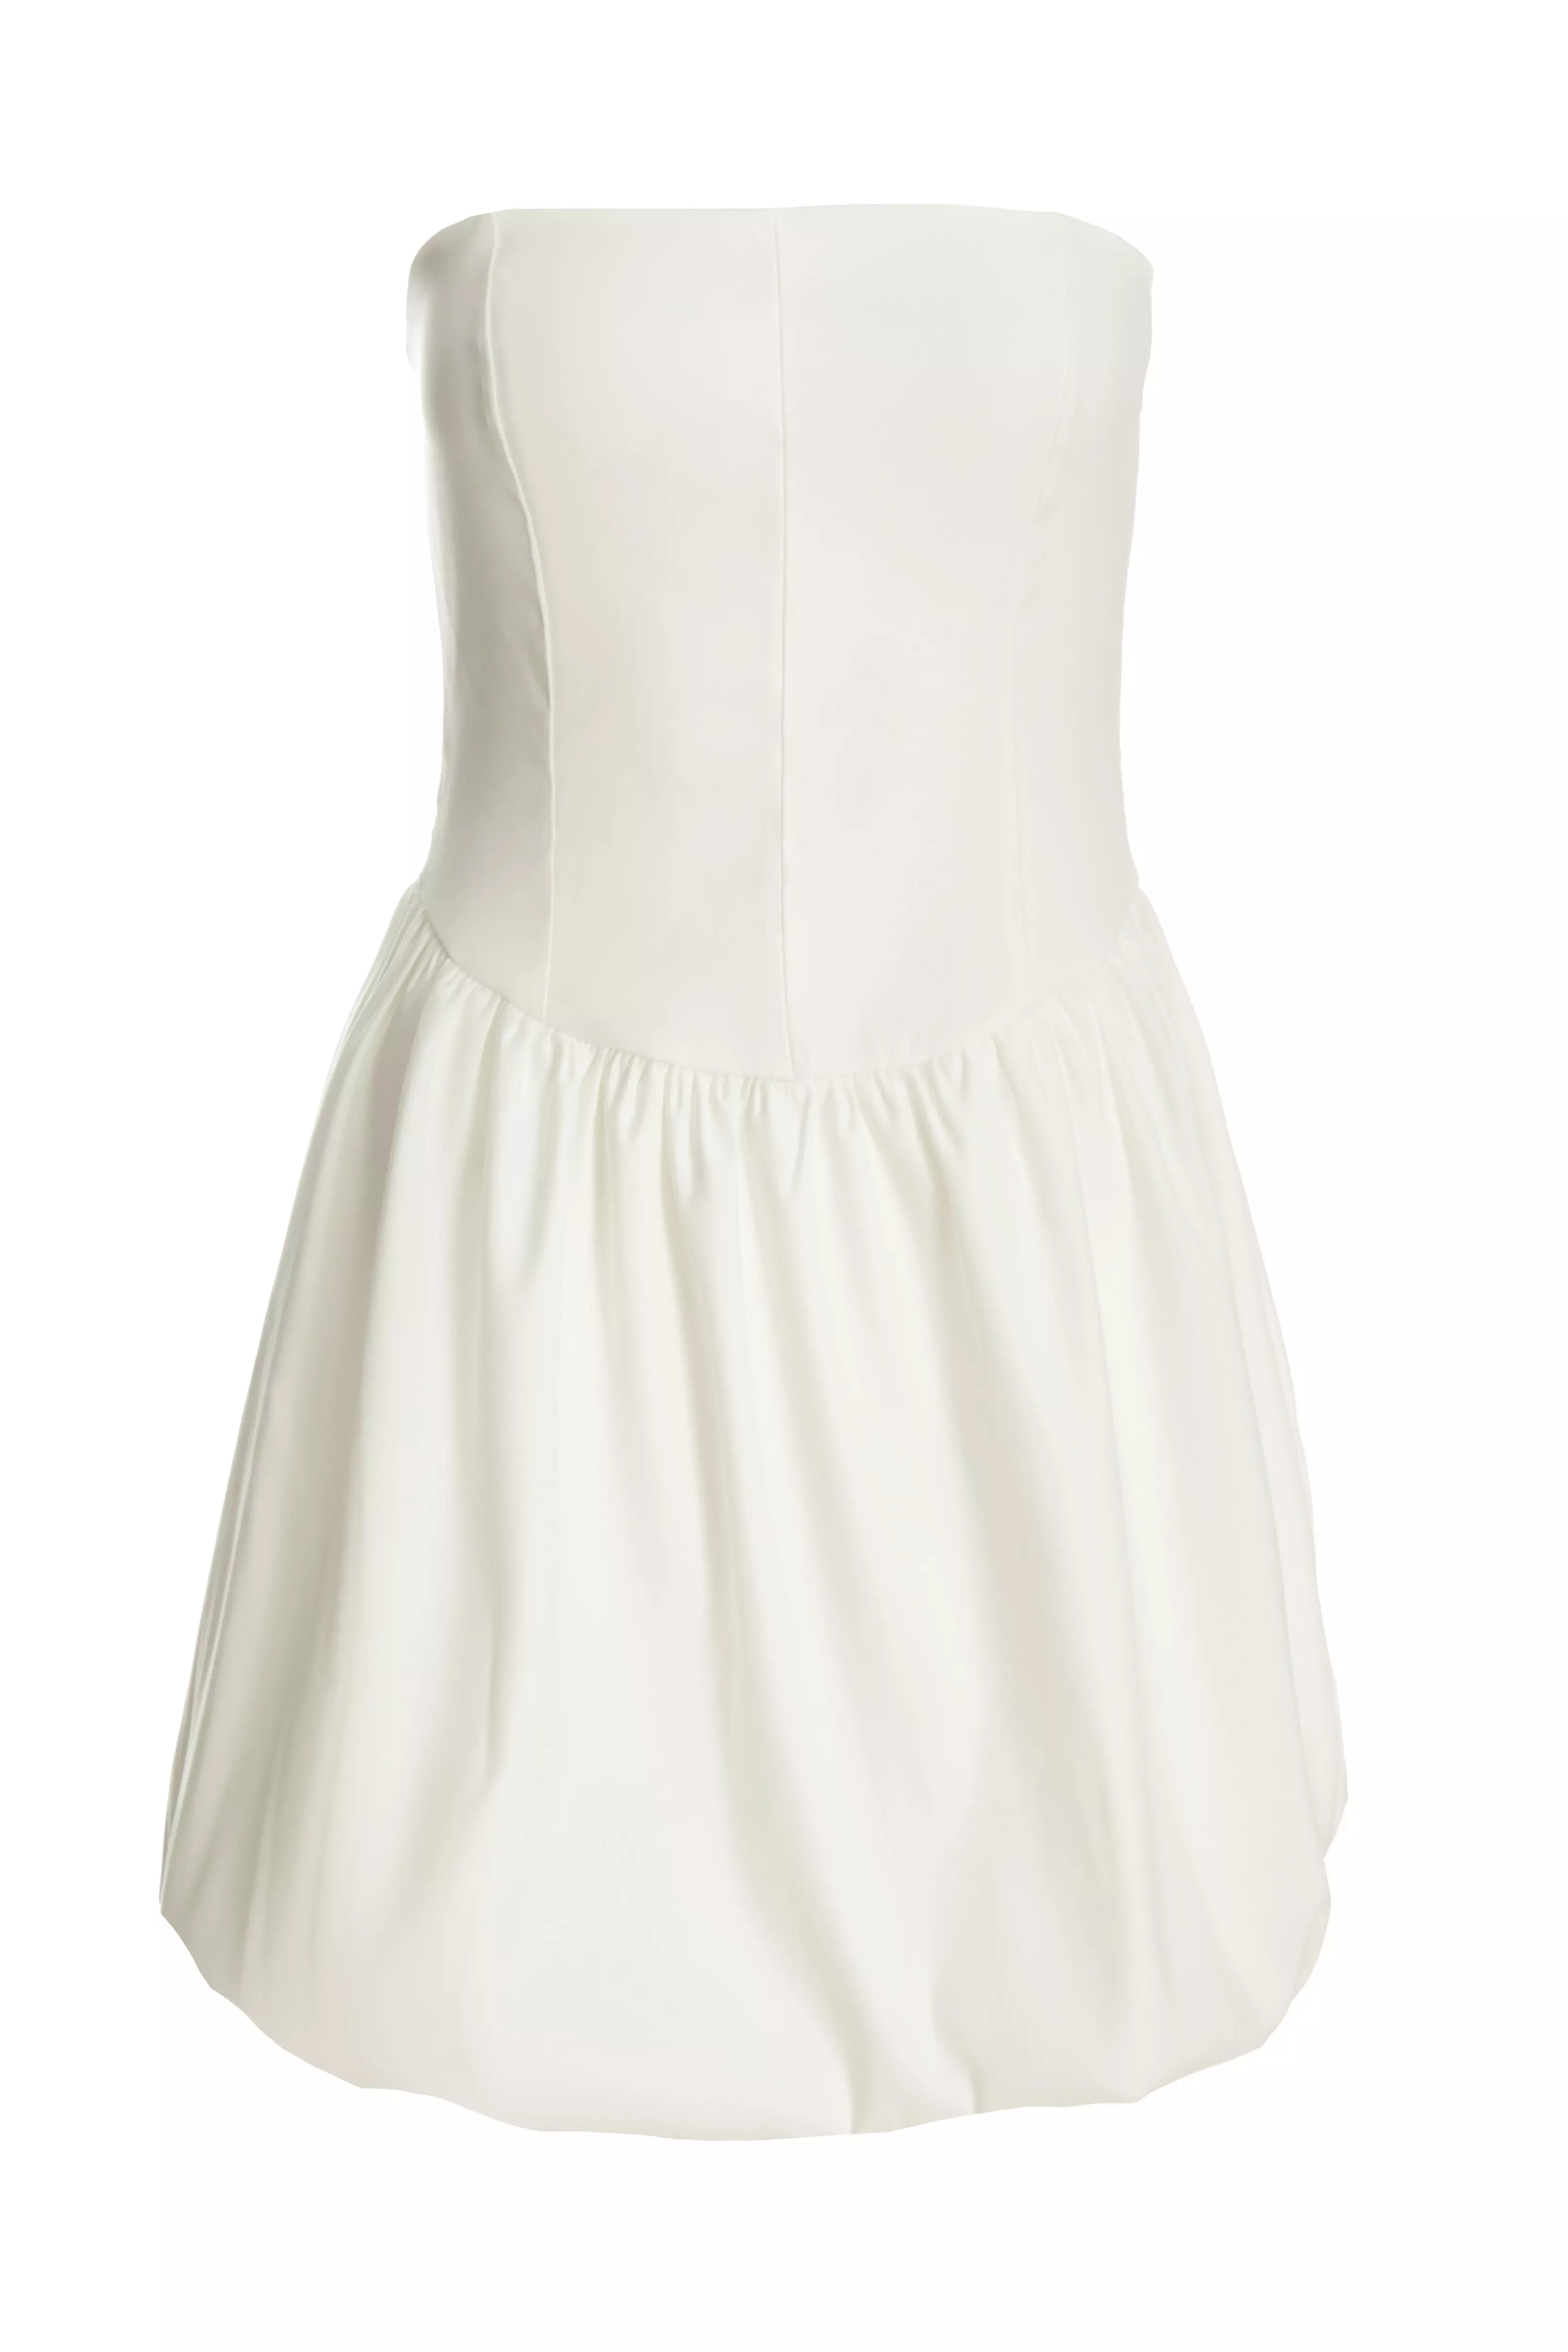 White Puff Ball Mini Dress